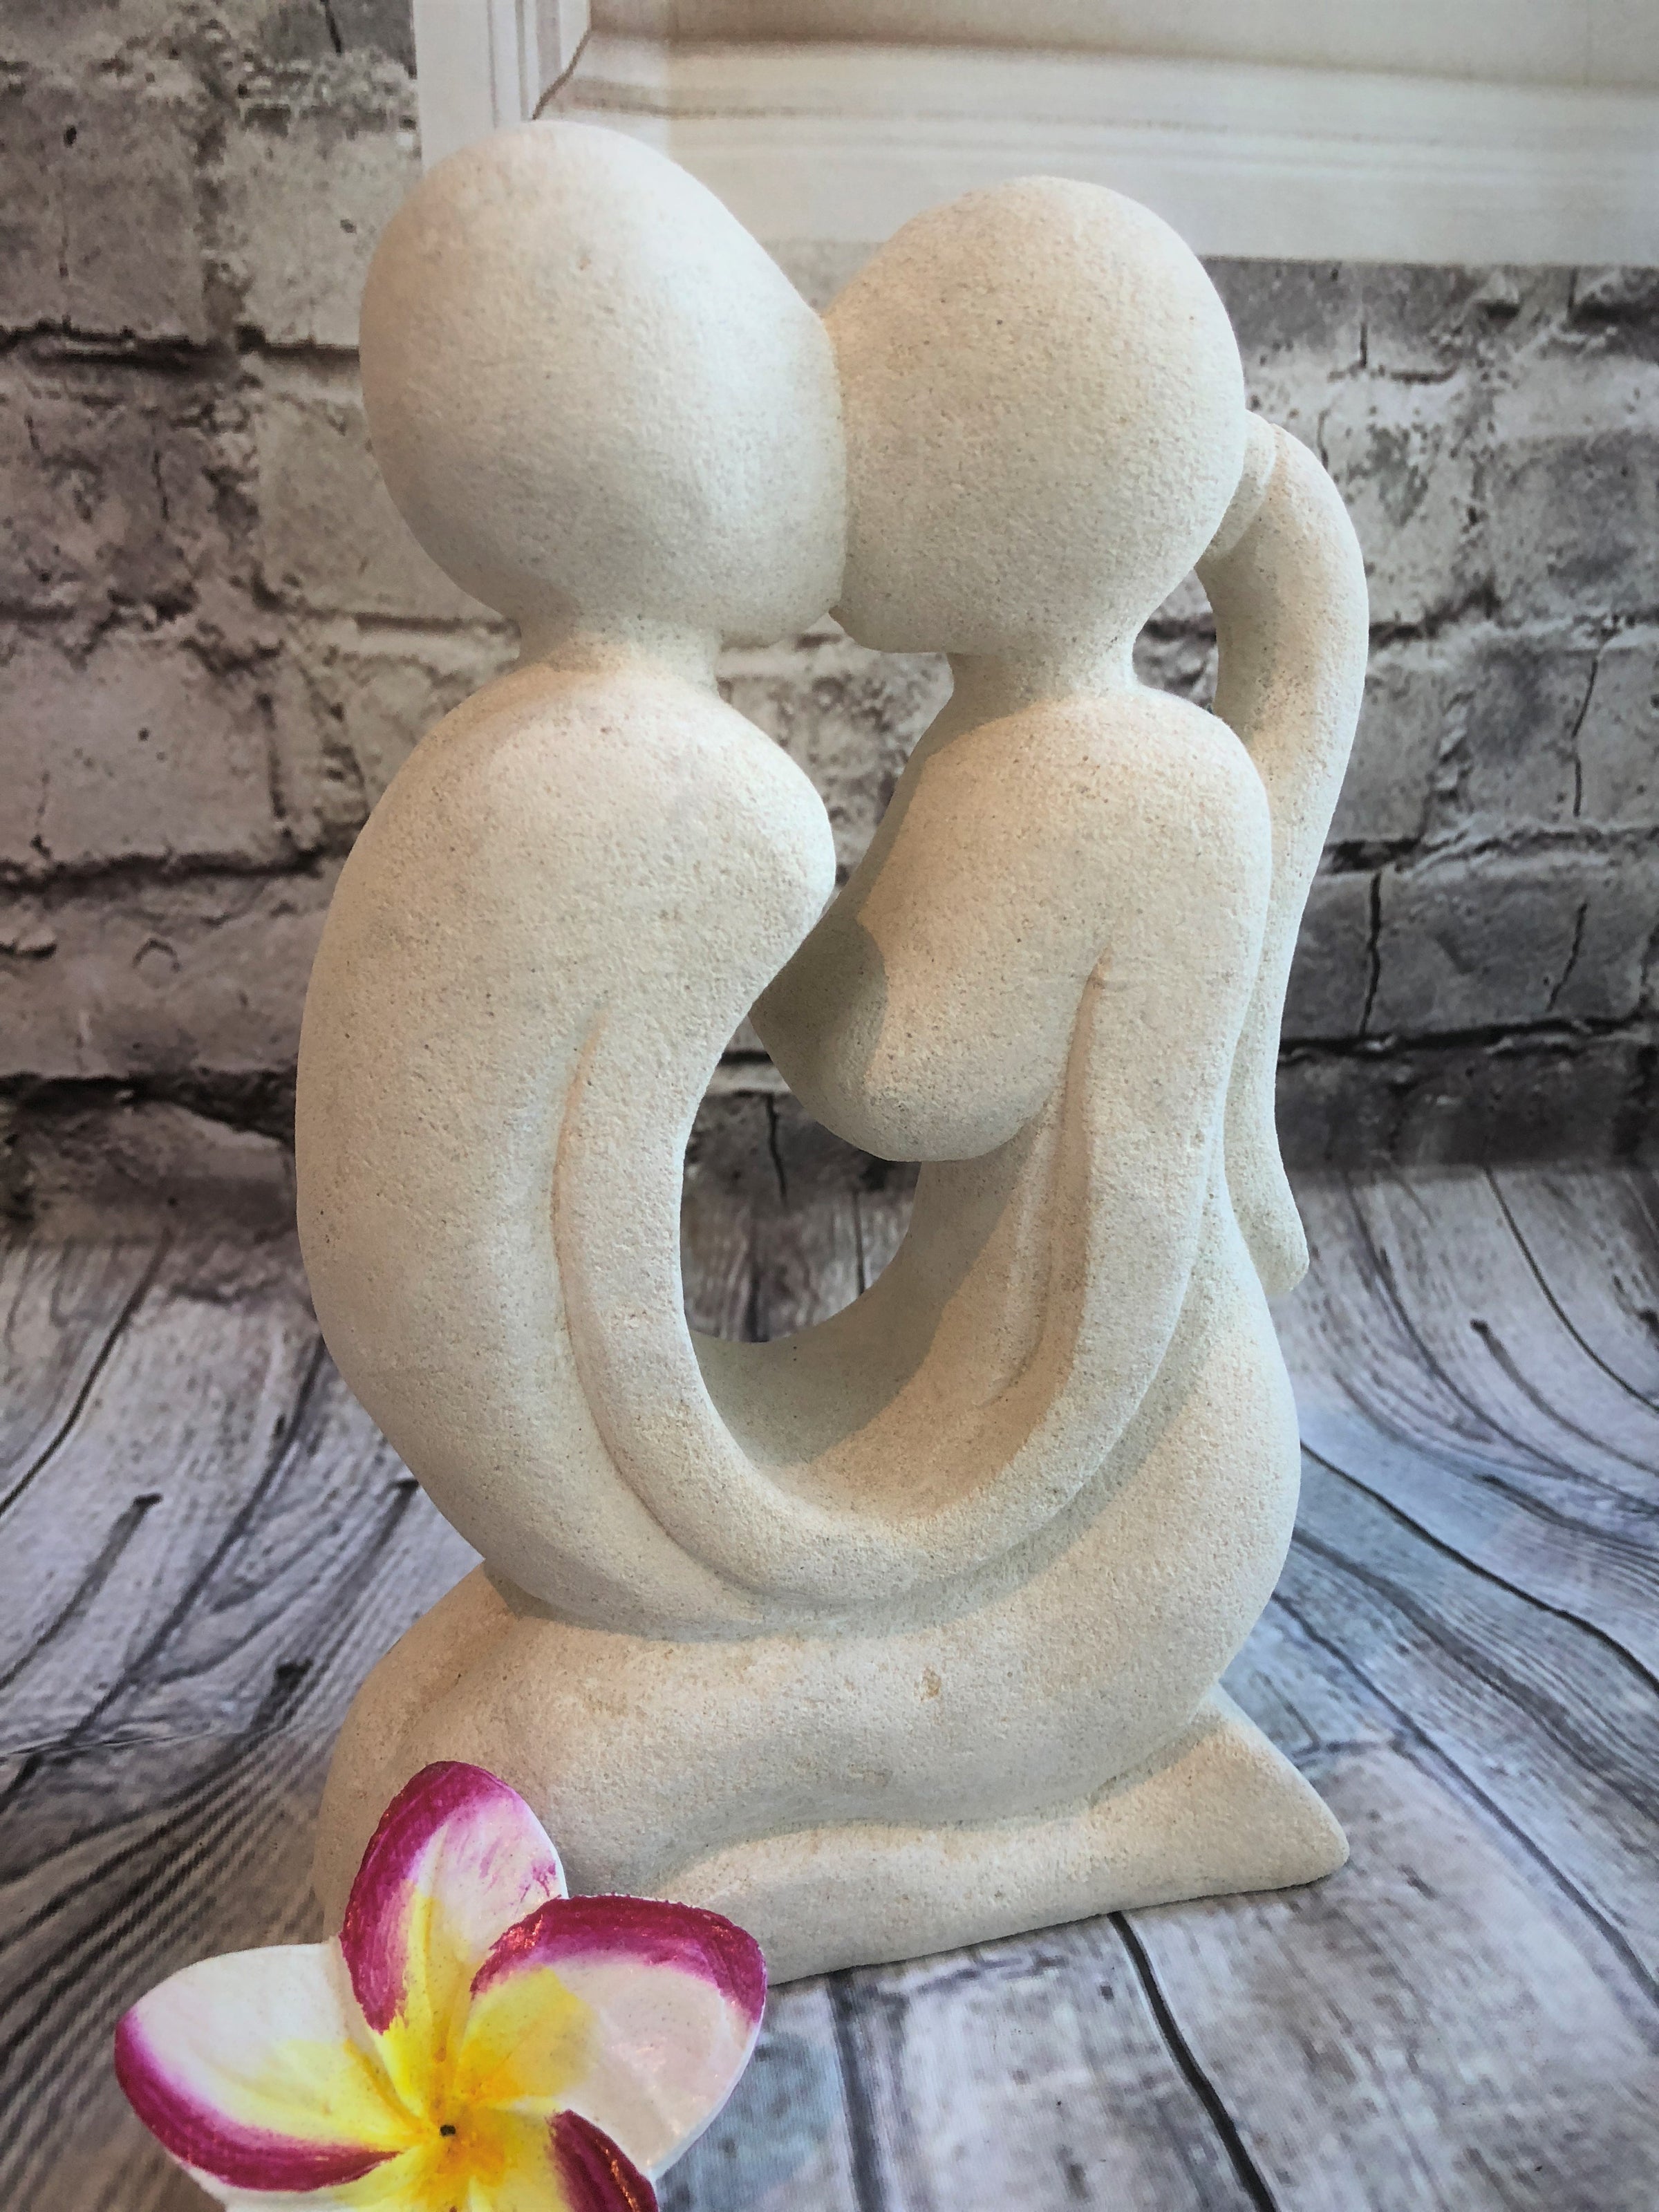 Limestone Kissing Couple Statue